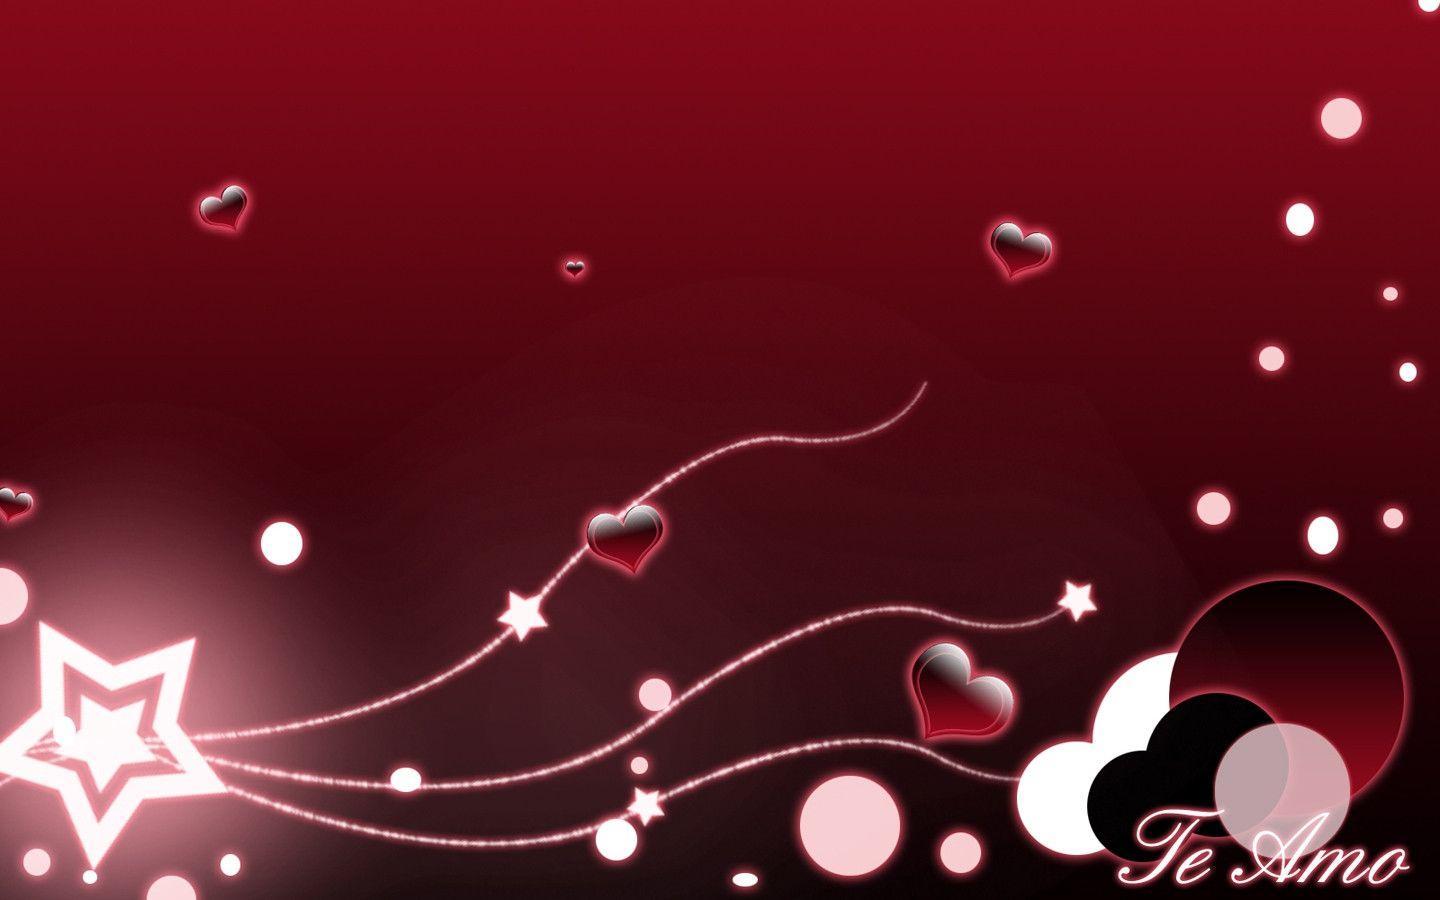 Art: I Love You Wallpaper Free Download, kingdom heart wallpaper